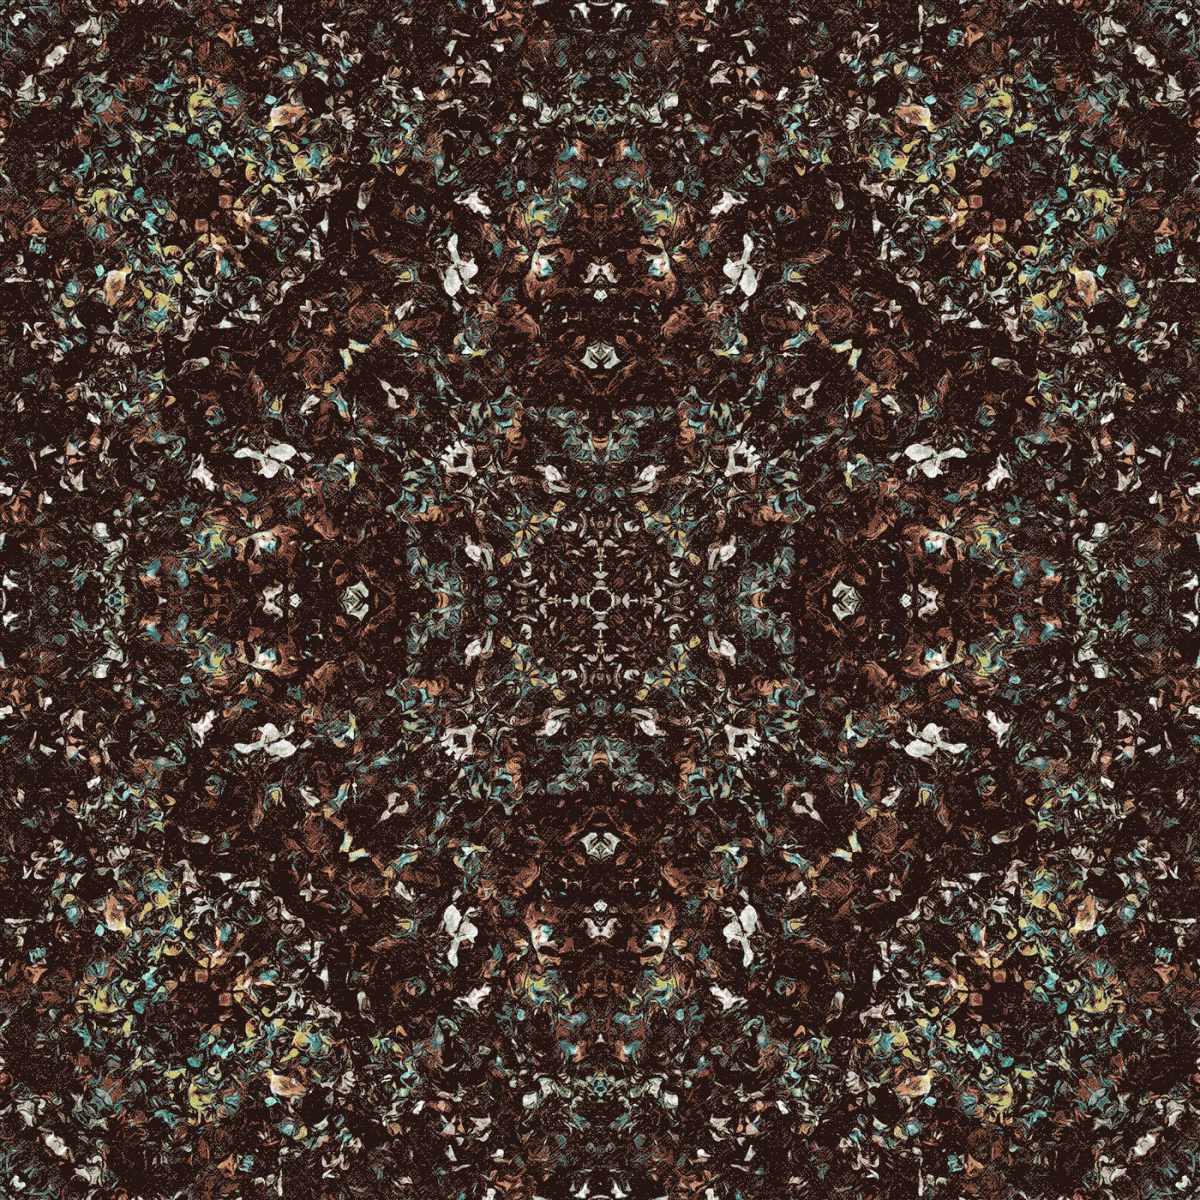 Pragyan Uprety pattern design  Patterns kaleidoscope Mandala pattern art generative vortex pattern